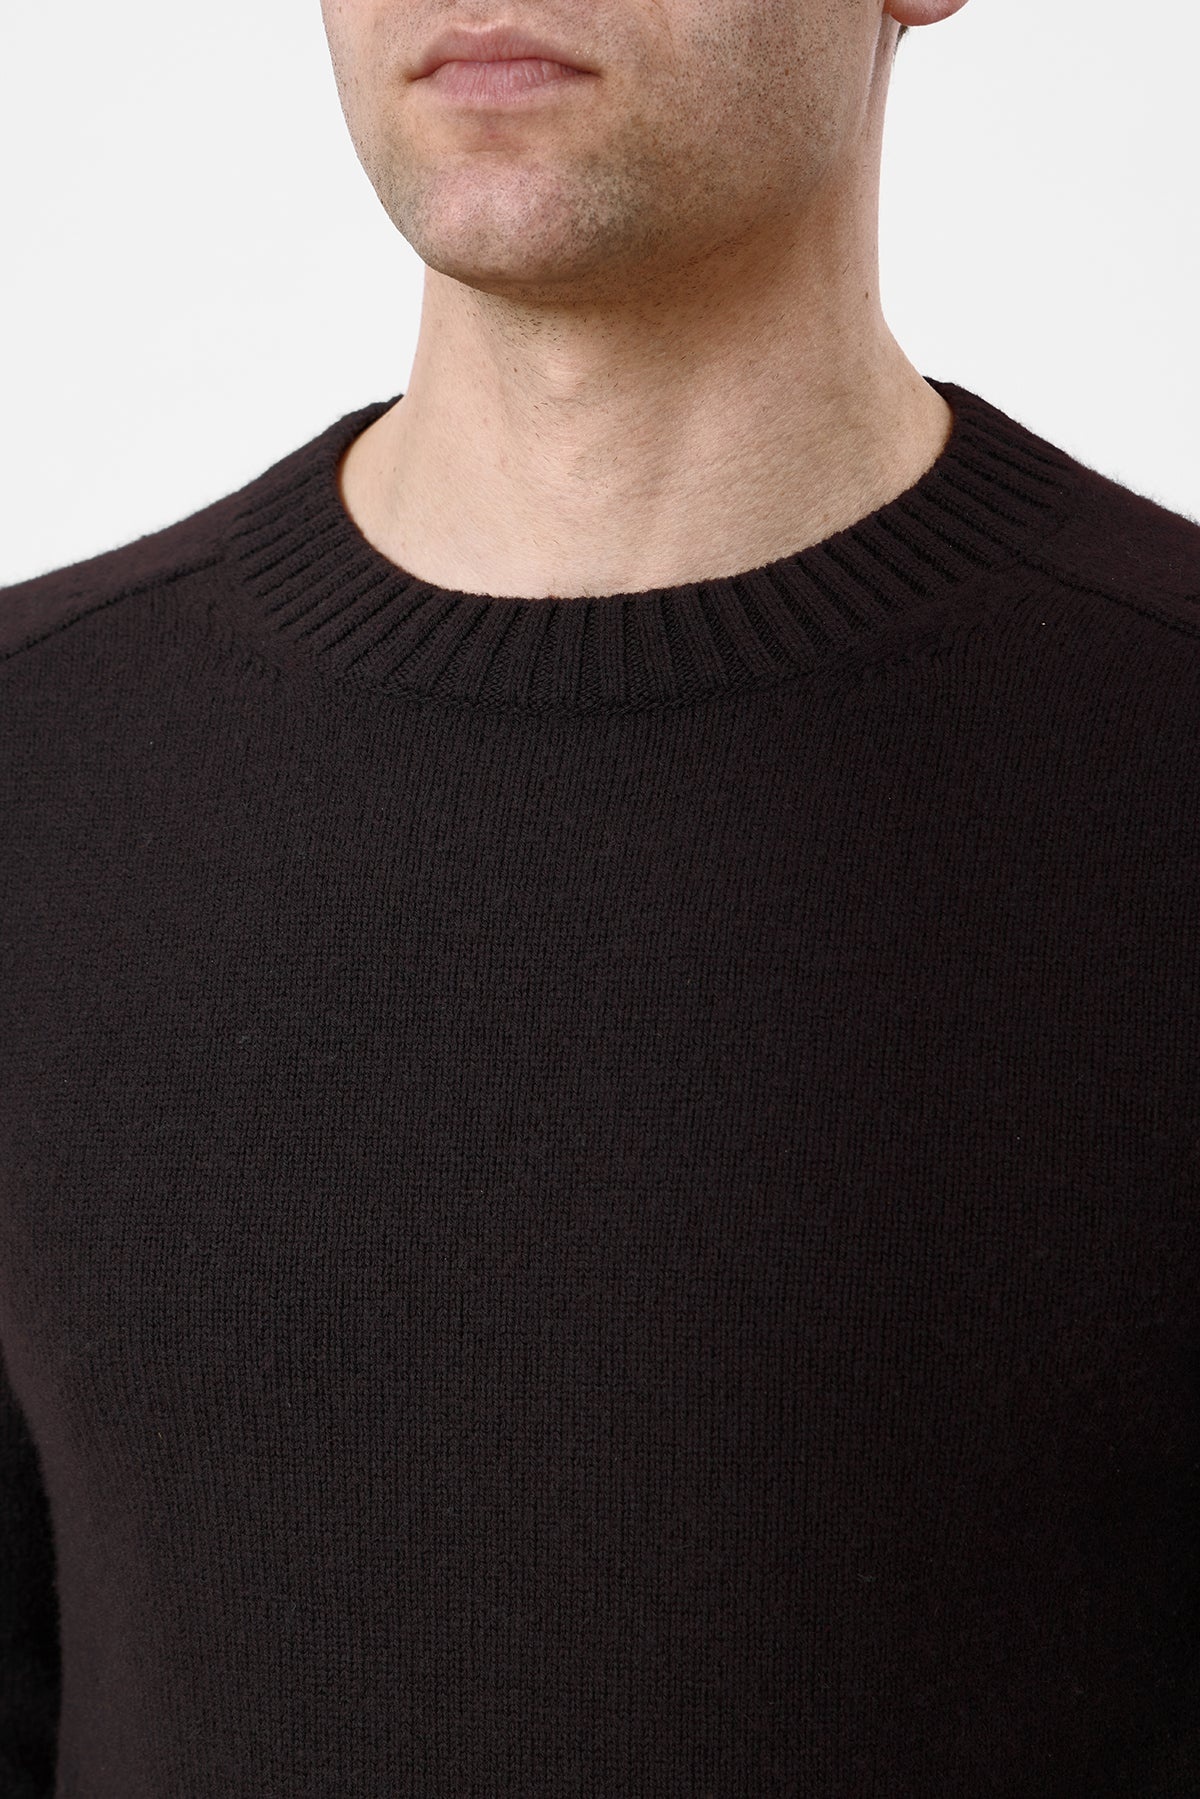 Daniel Knit Sweater in Chocolate Cashmere - 5